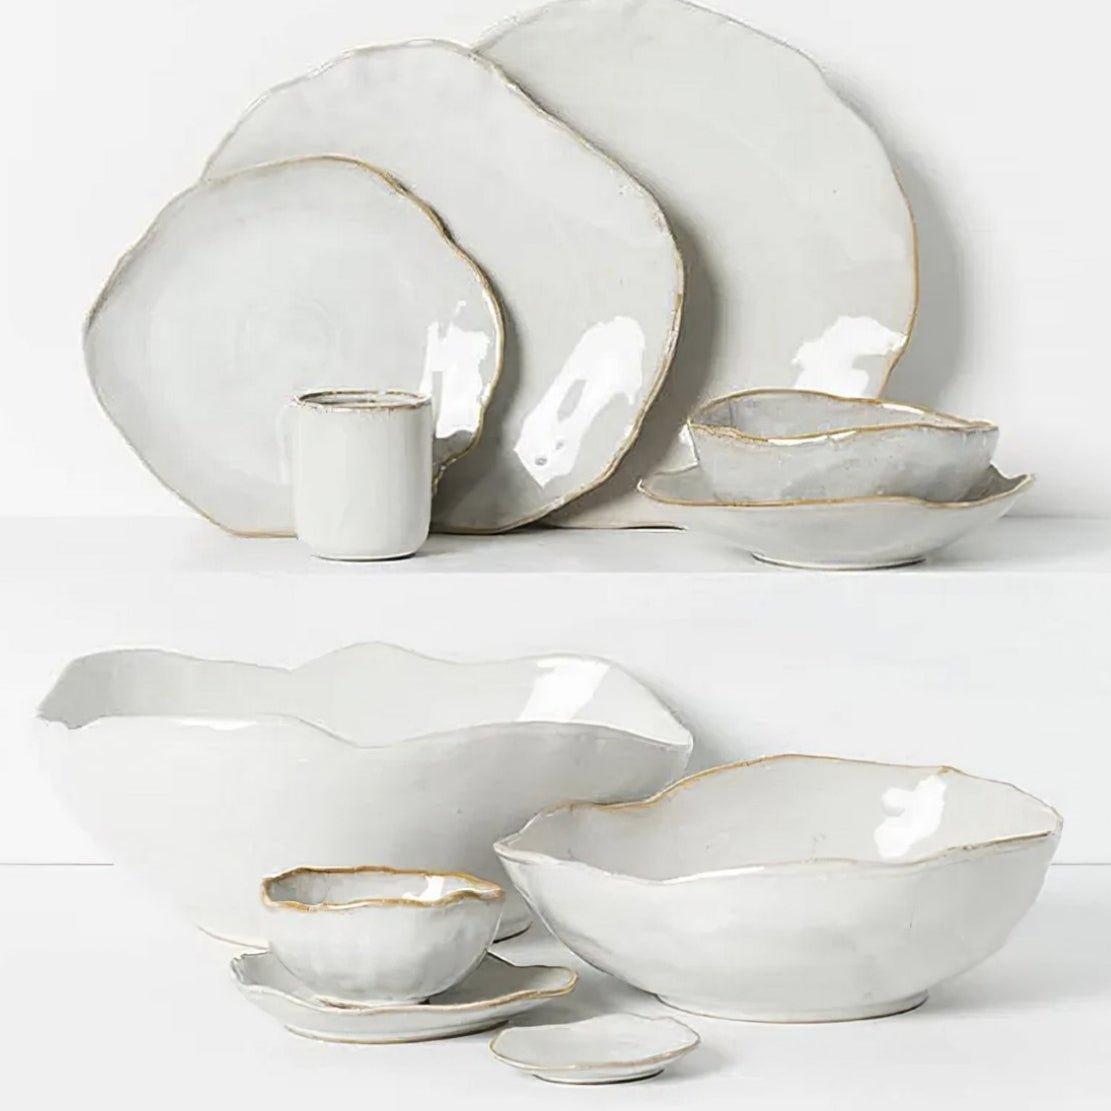 White, ceramic, nordic style irregular ceramic tableware dish plates & bowls